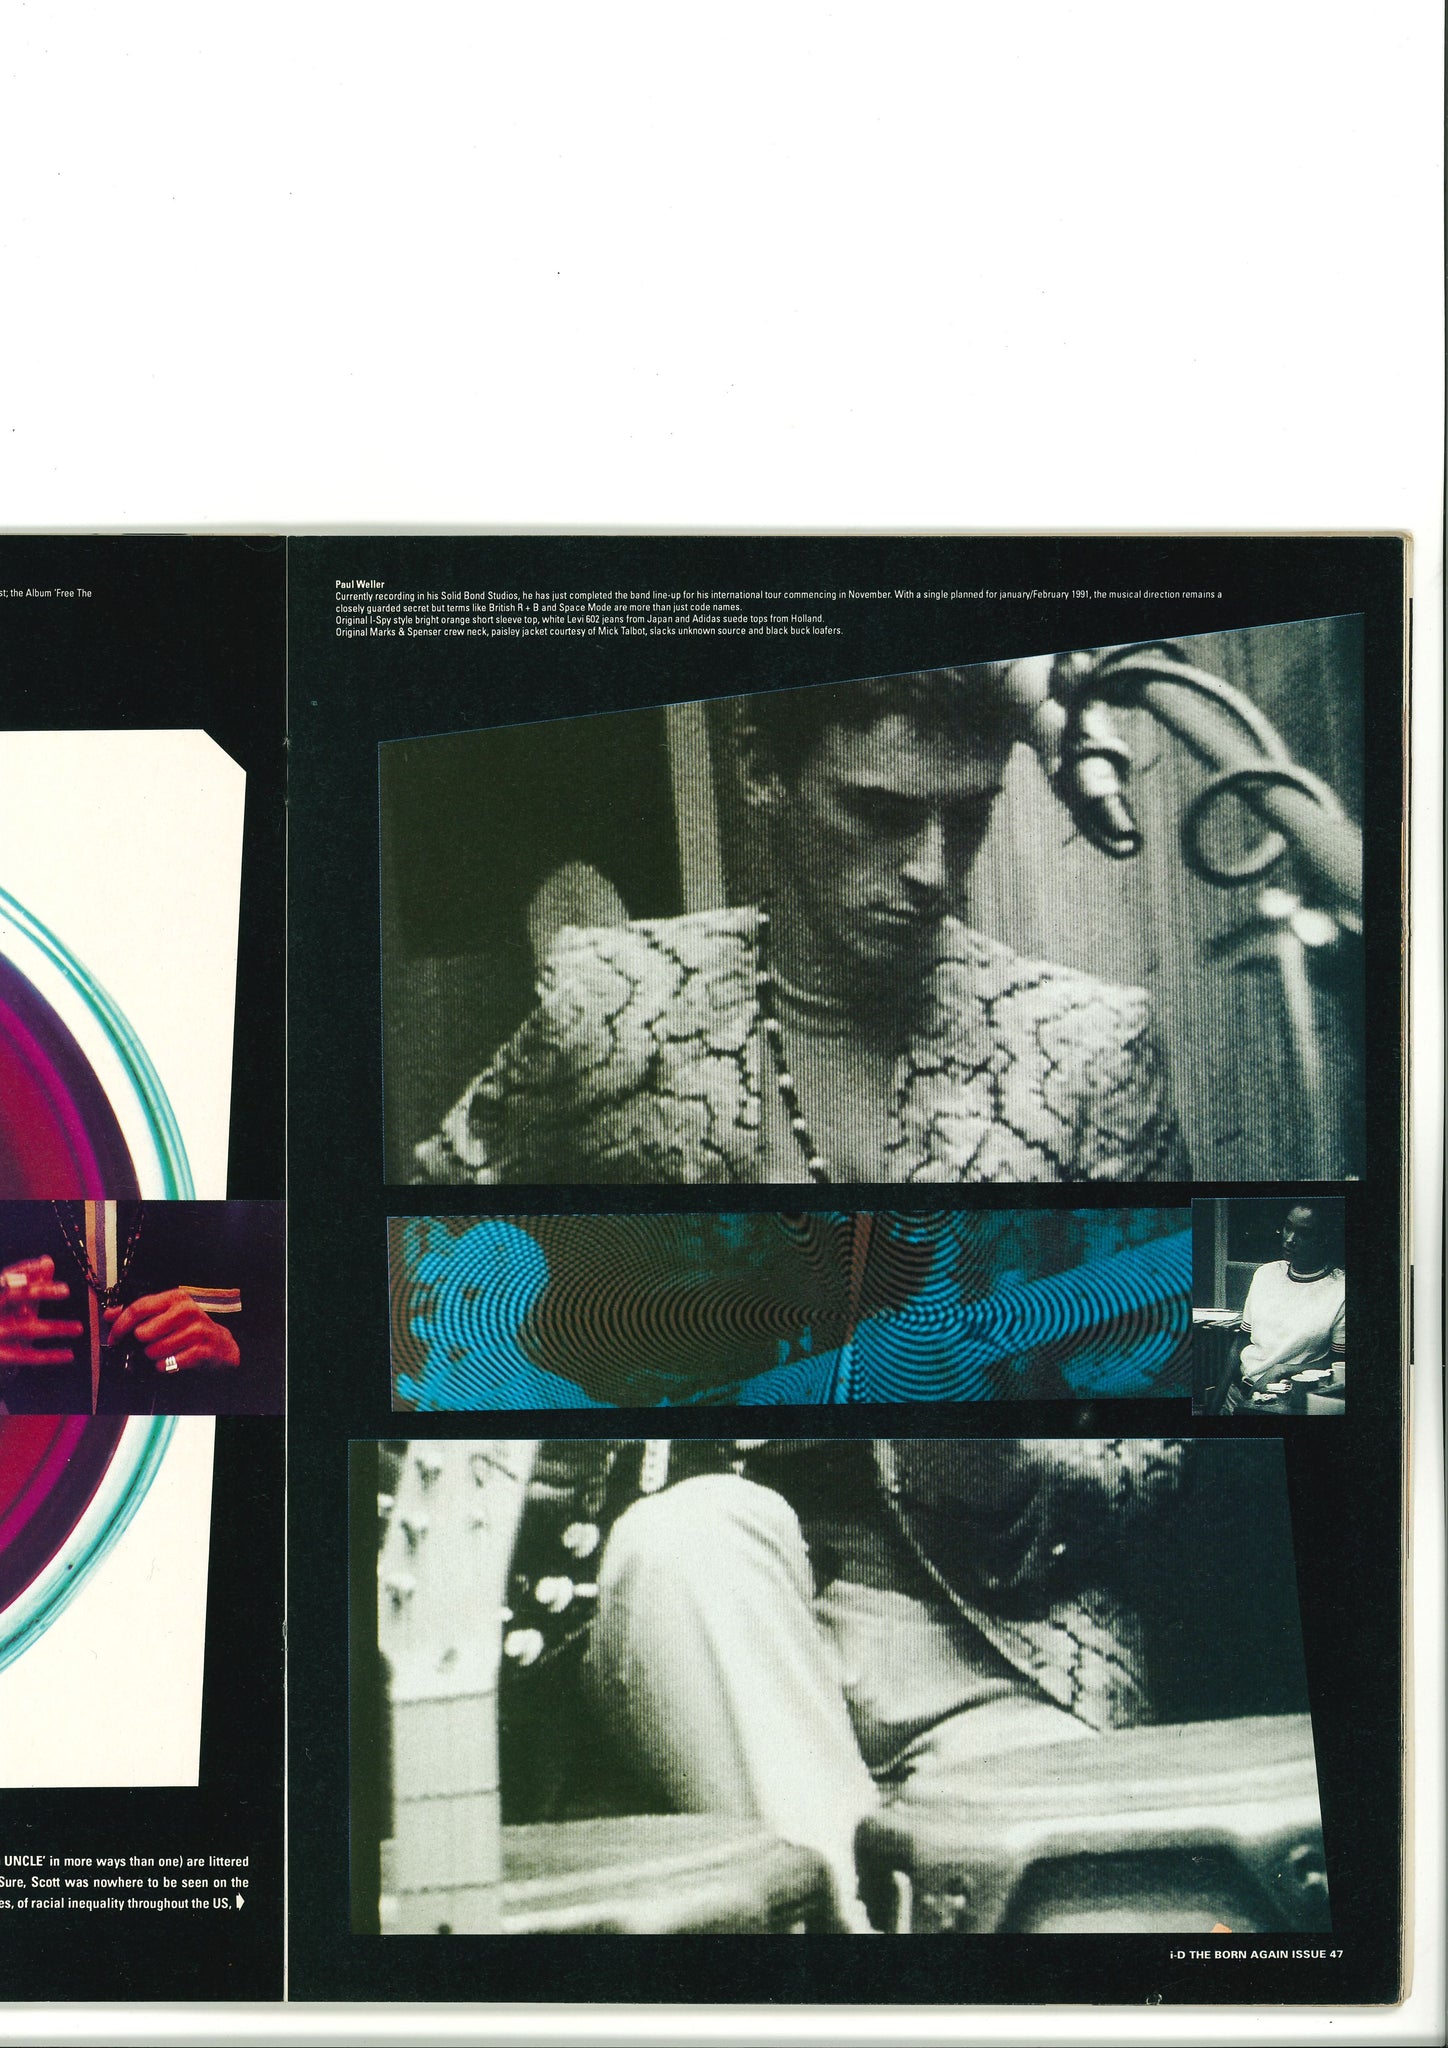 Paul Weller Anglozine Mod style I-D 1990